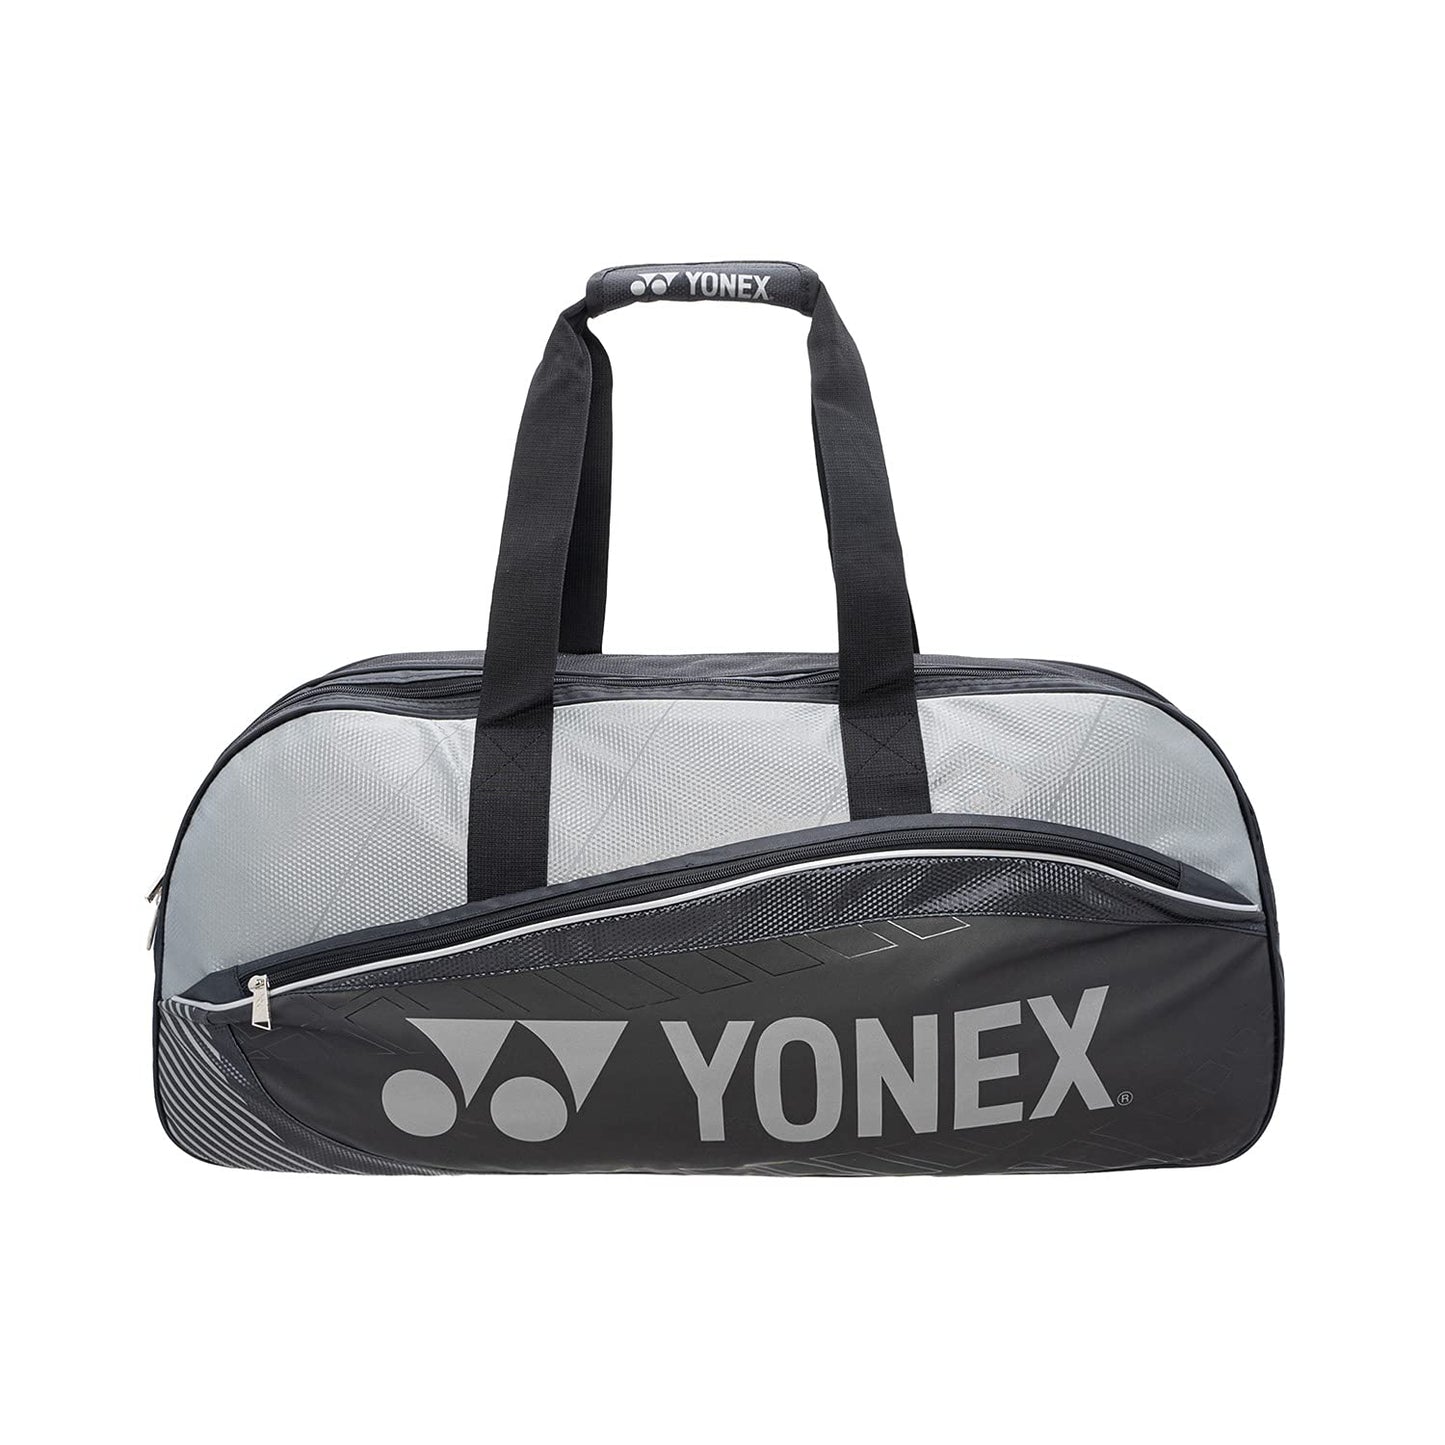 Yonex SUNRBQ11MS2 Badminton Tournament Bag , Black/Dark Grey - Best Price online Prokicksports.com